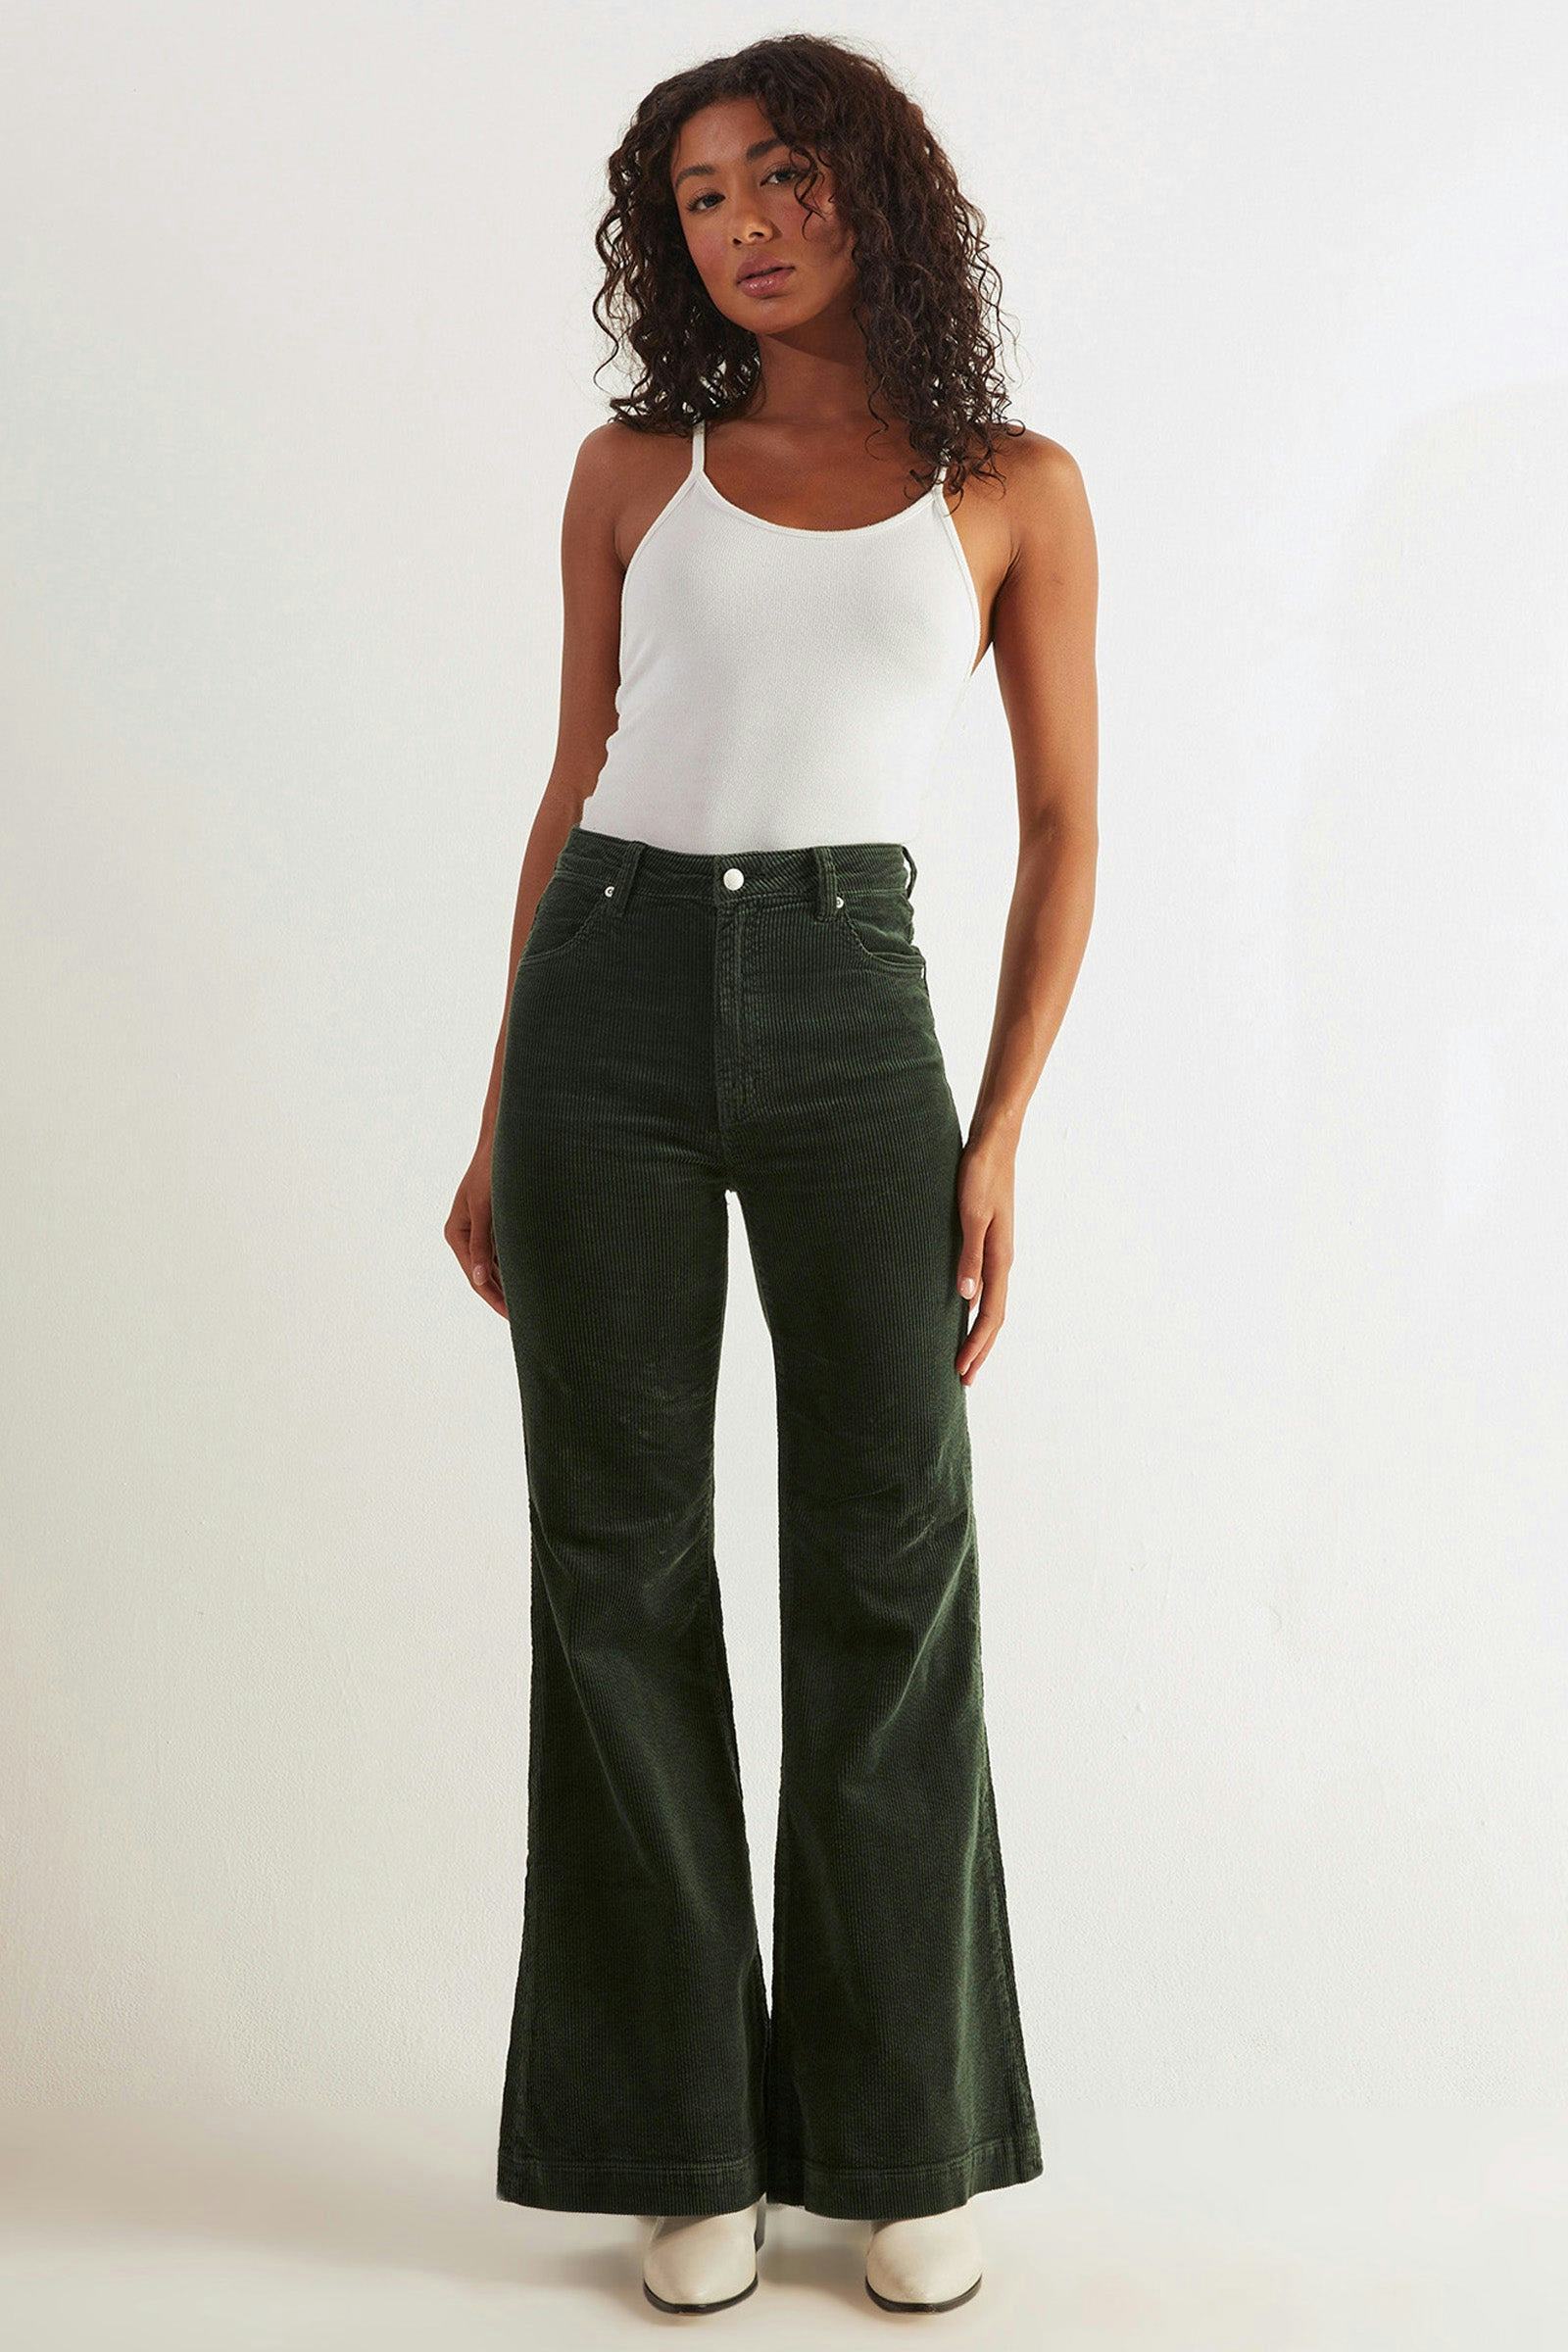 Buy Women's Cord Jeans & Cord Pants Online